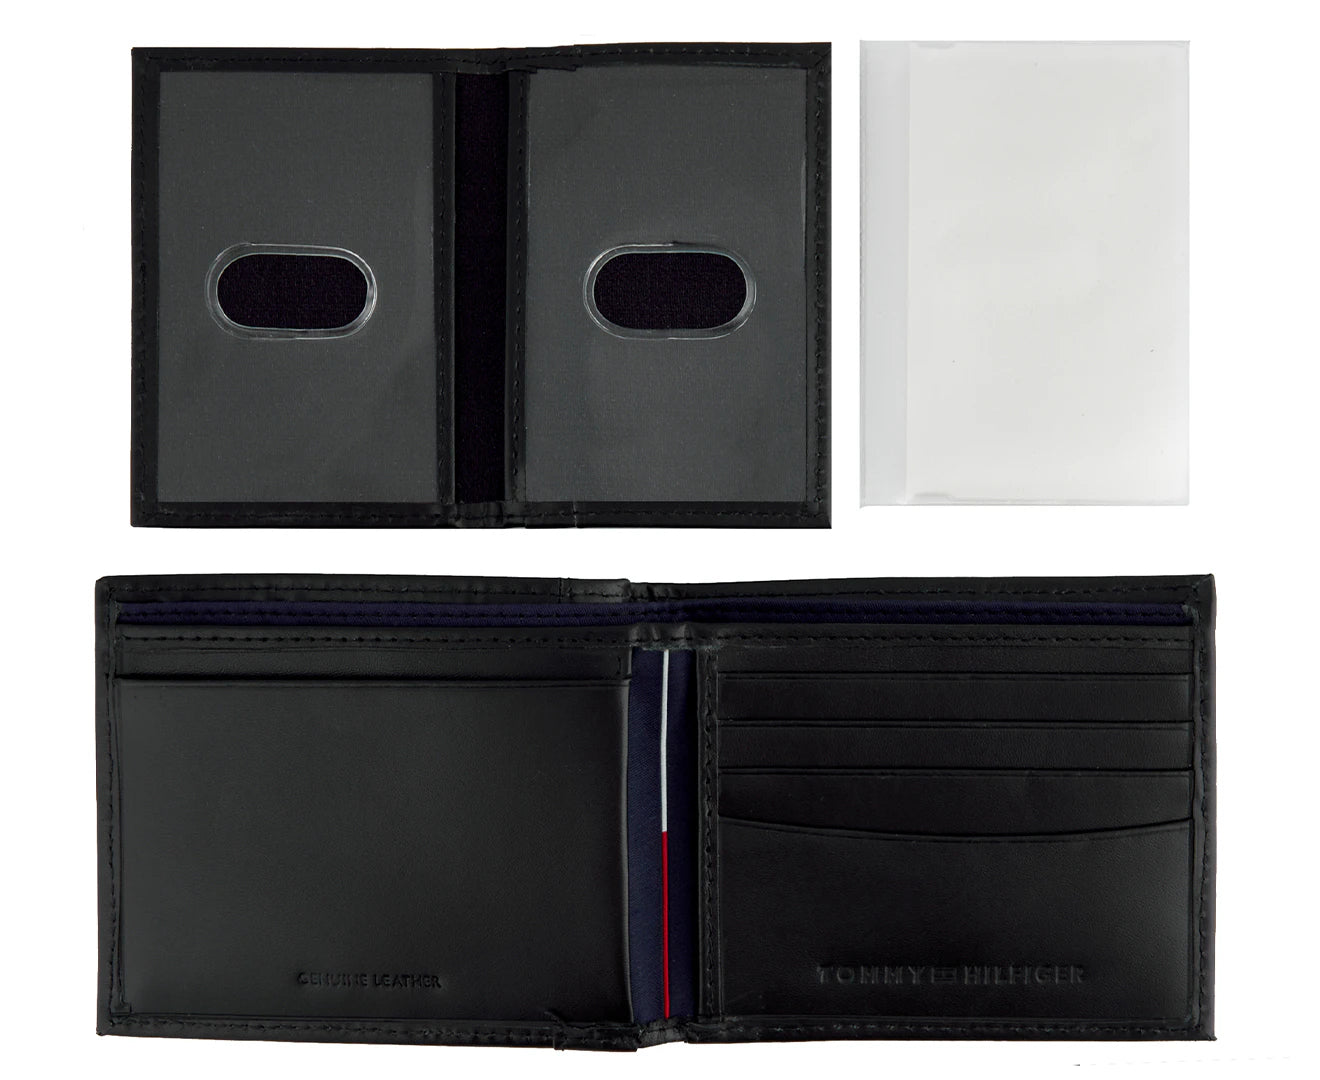 Tommy Hilfiger Men's Leather Wallet Cambridge Passcase Billfold Wallet, Black (Inside)